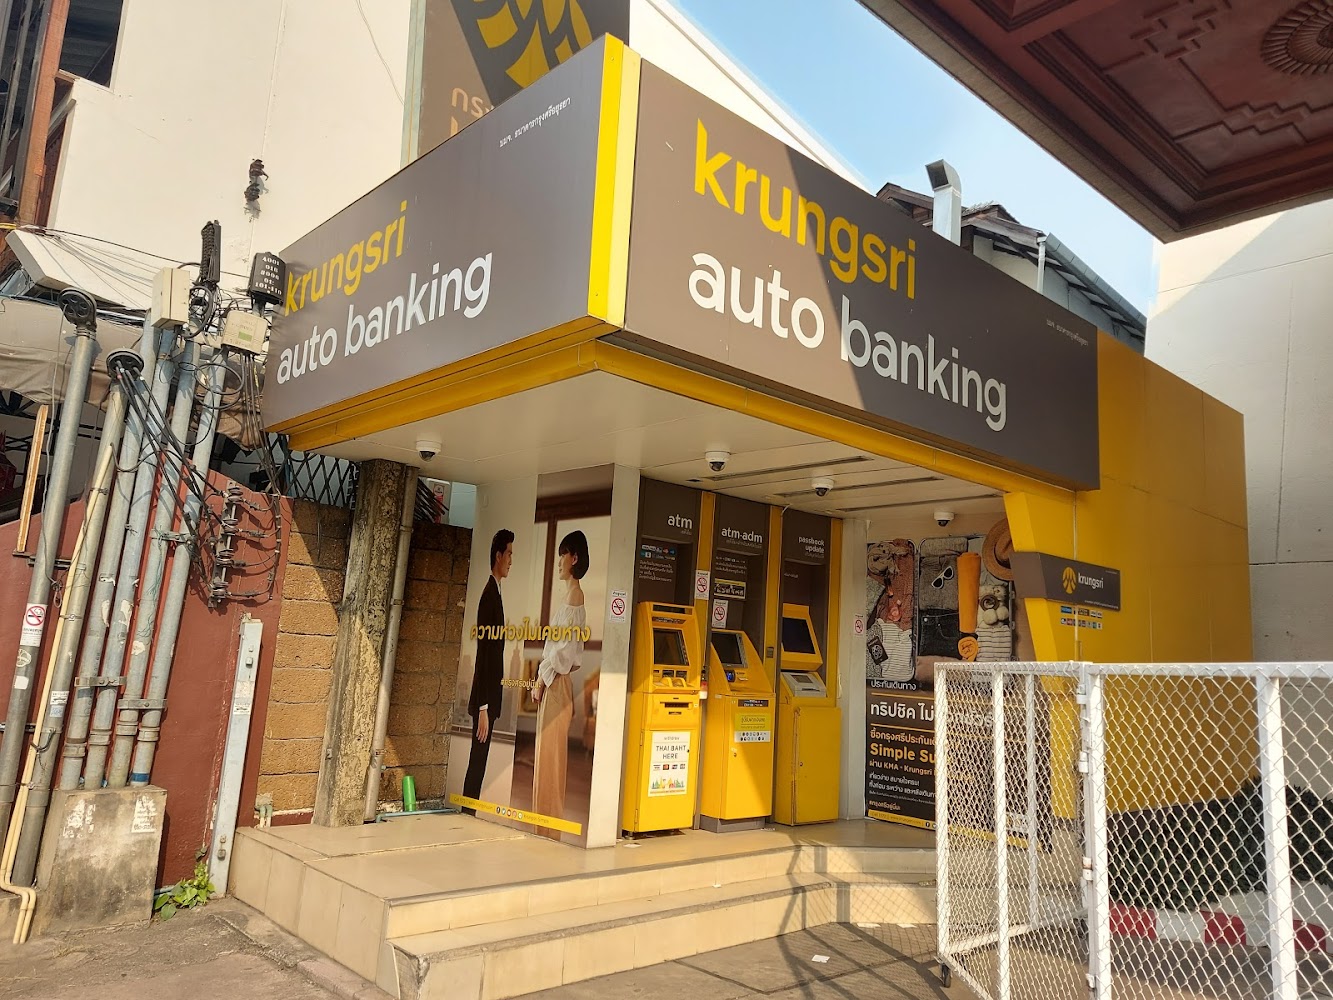 Atm Krungsri Bank: ตู้เอทีเอ็มของธนาคารกรุงศรีที่เชียงใหม่อำเภอเมืองเชียงใหม่  - สนใจยืมเงินออนไลน์ผ่านแหล่งเงินด่วนรับสินเชื่อพร้อมบัตรกดเงินสด  และมีรีไฟแนนซ์ด้วย